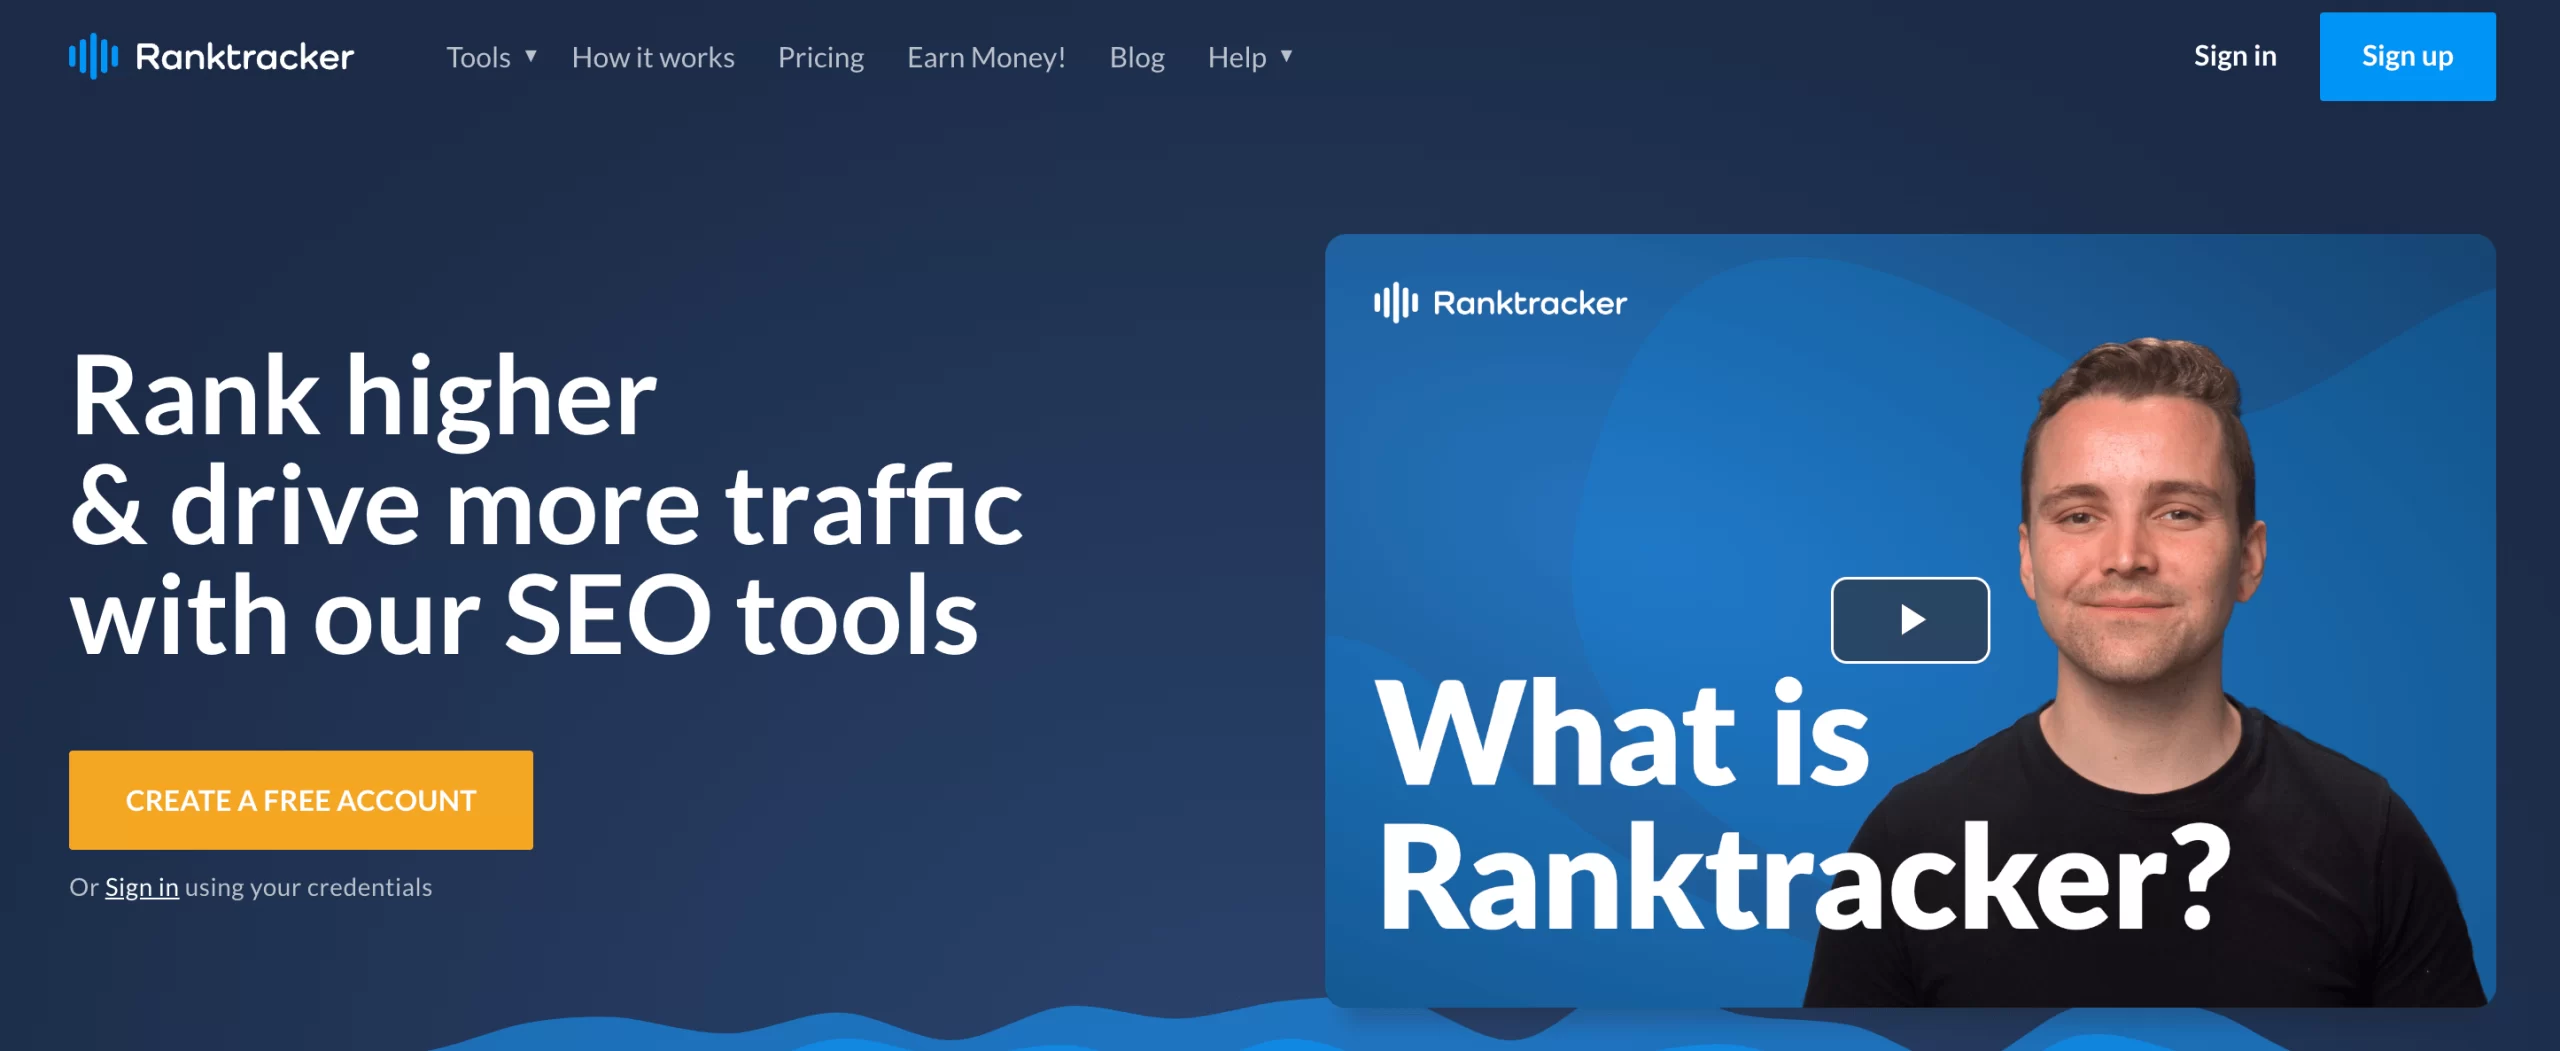 Ranktracker's website homepage